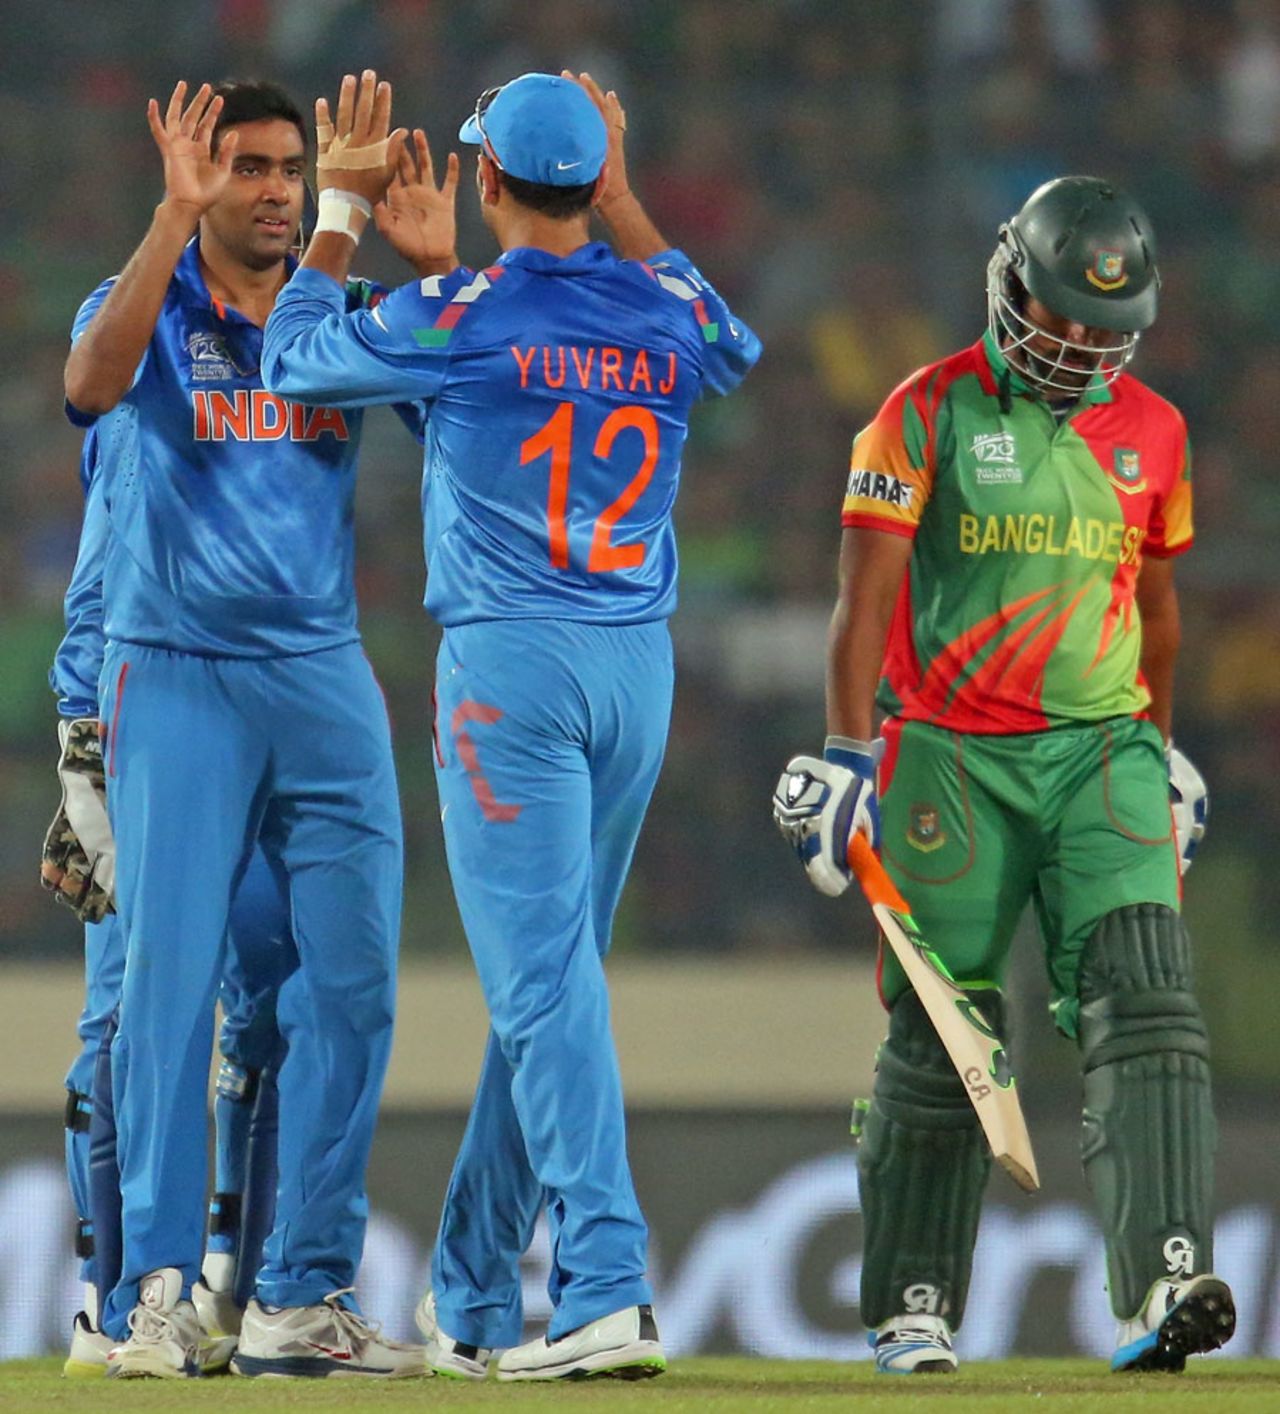 R Ashwin celebrates after dismissing Tamim Iqbal, Bangladesh v India, World T20, Group 2, Mirpur, March 28, 2014